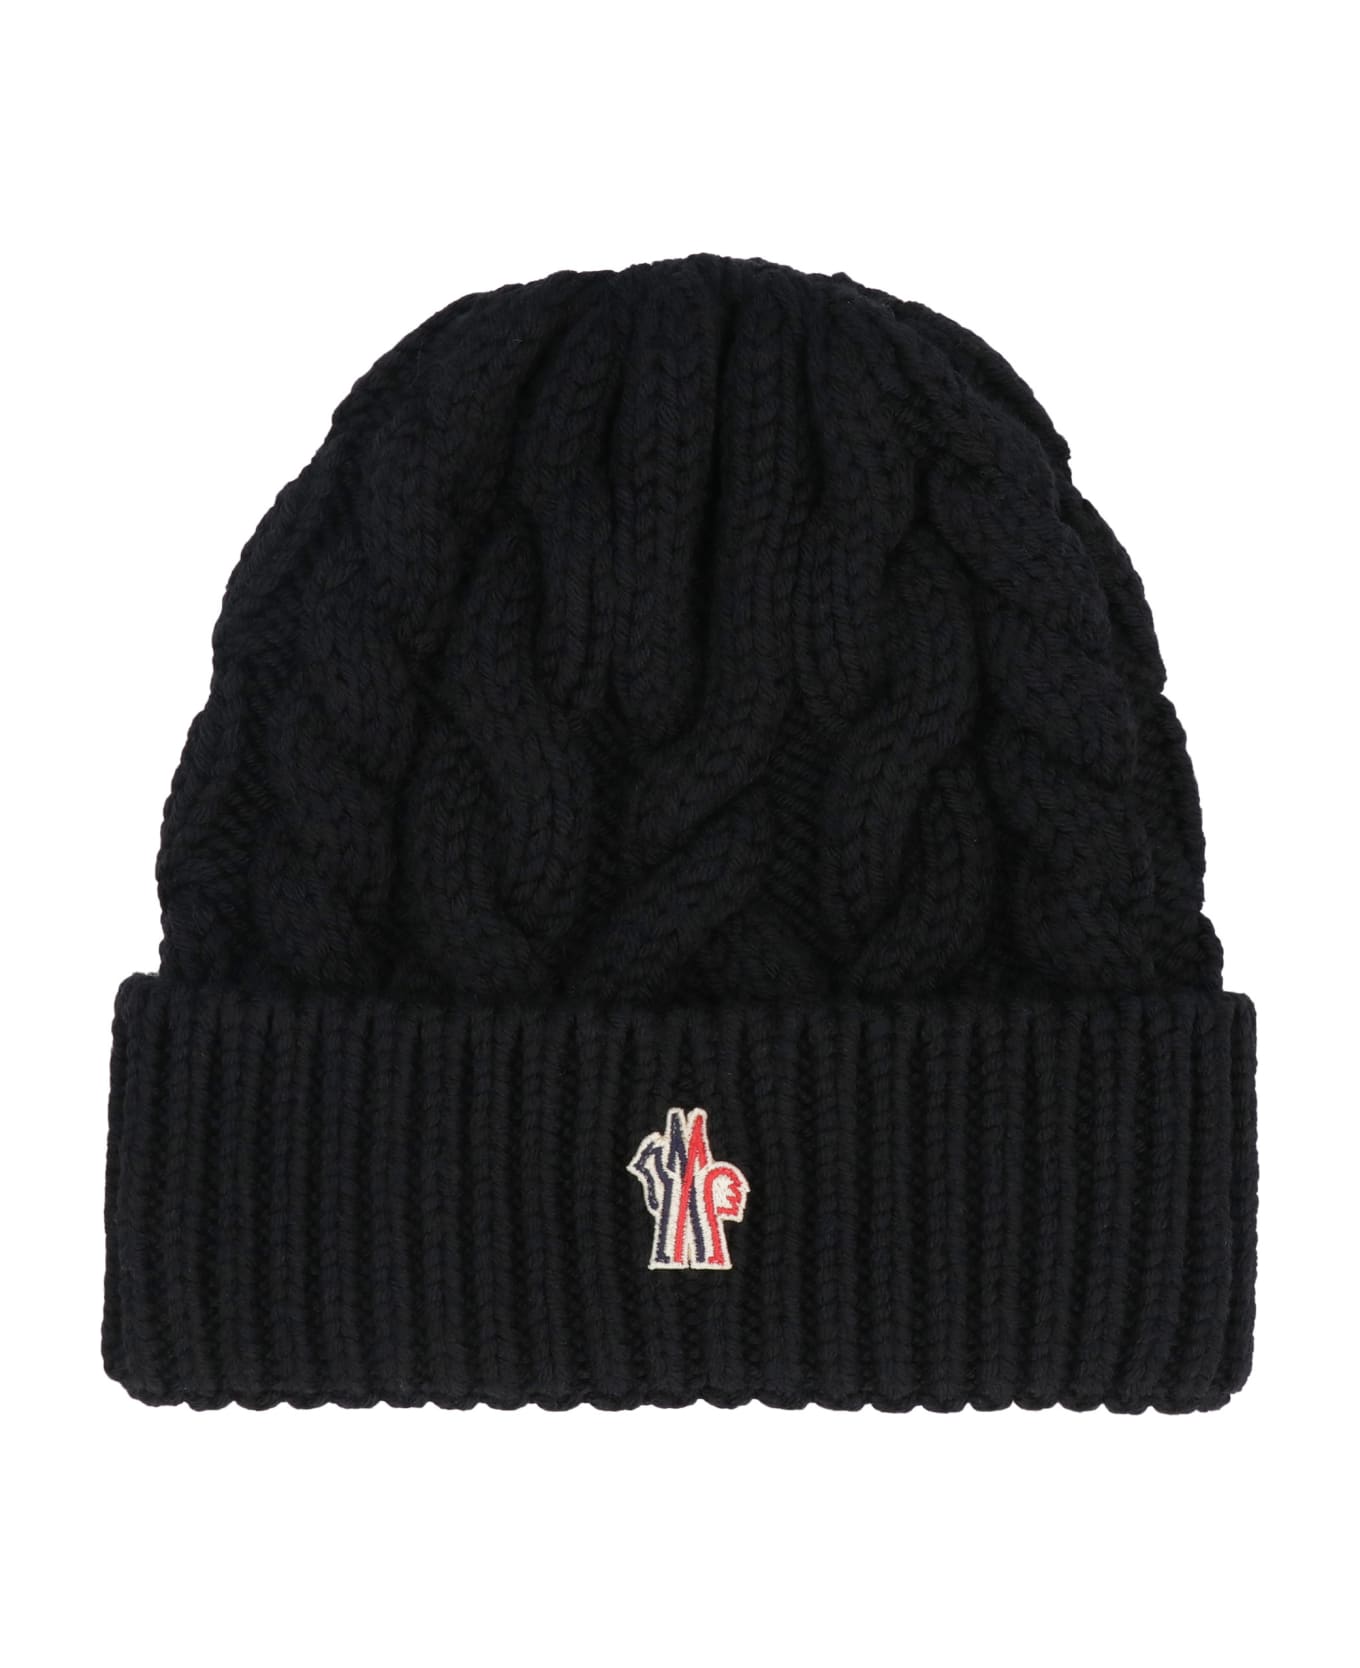 Moncler Grenoble Wool Hat - Black 帽子